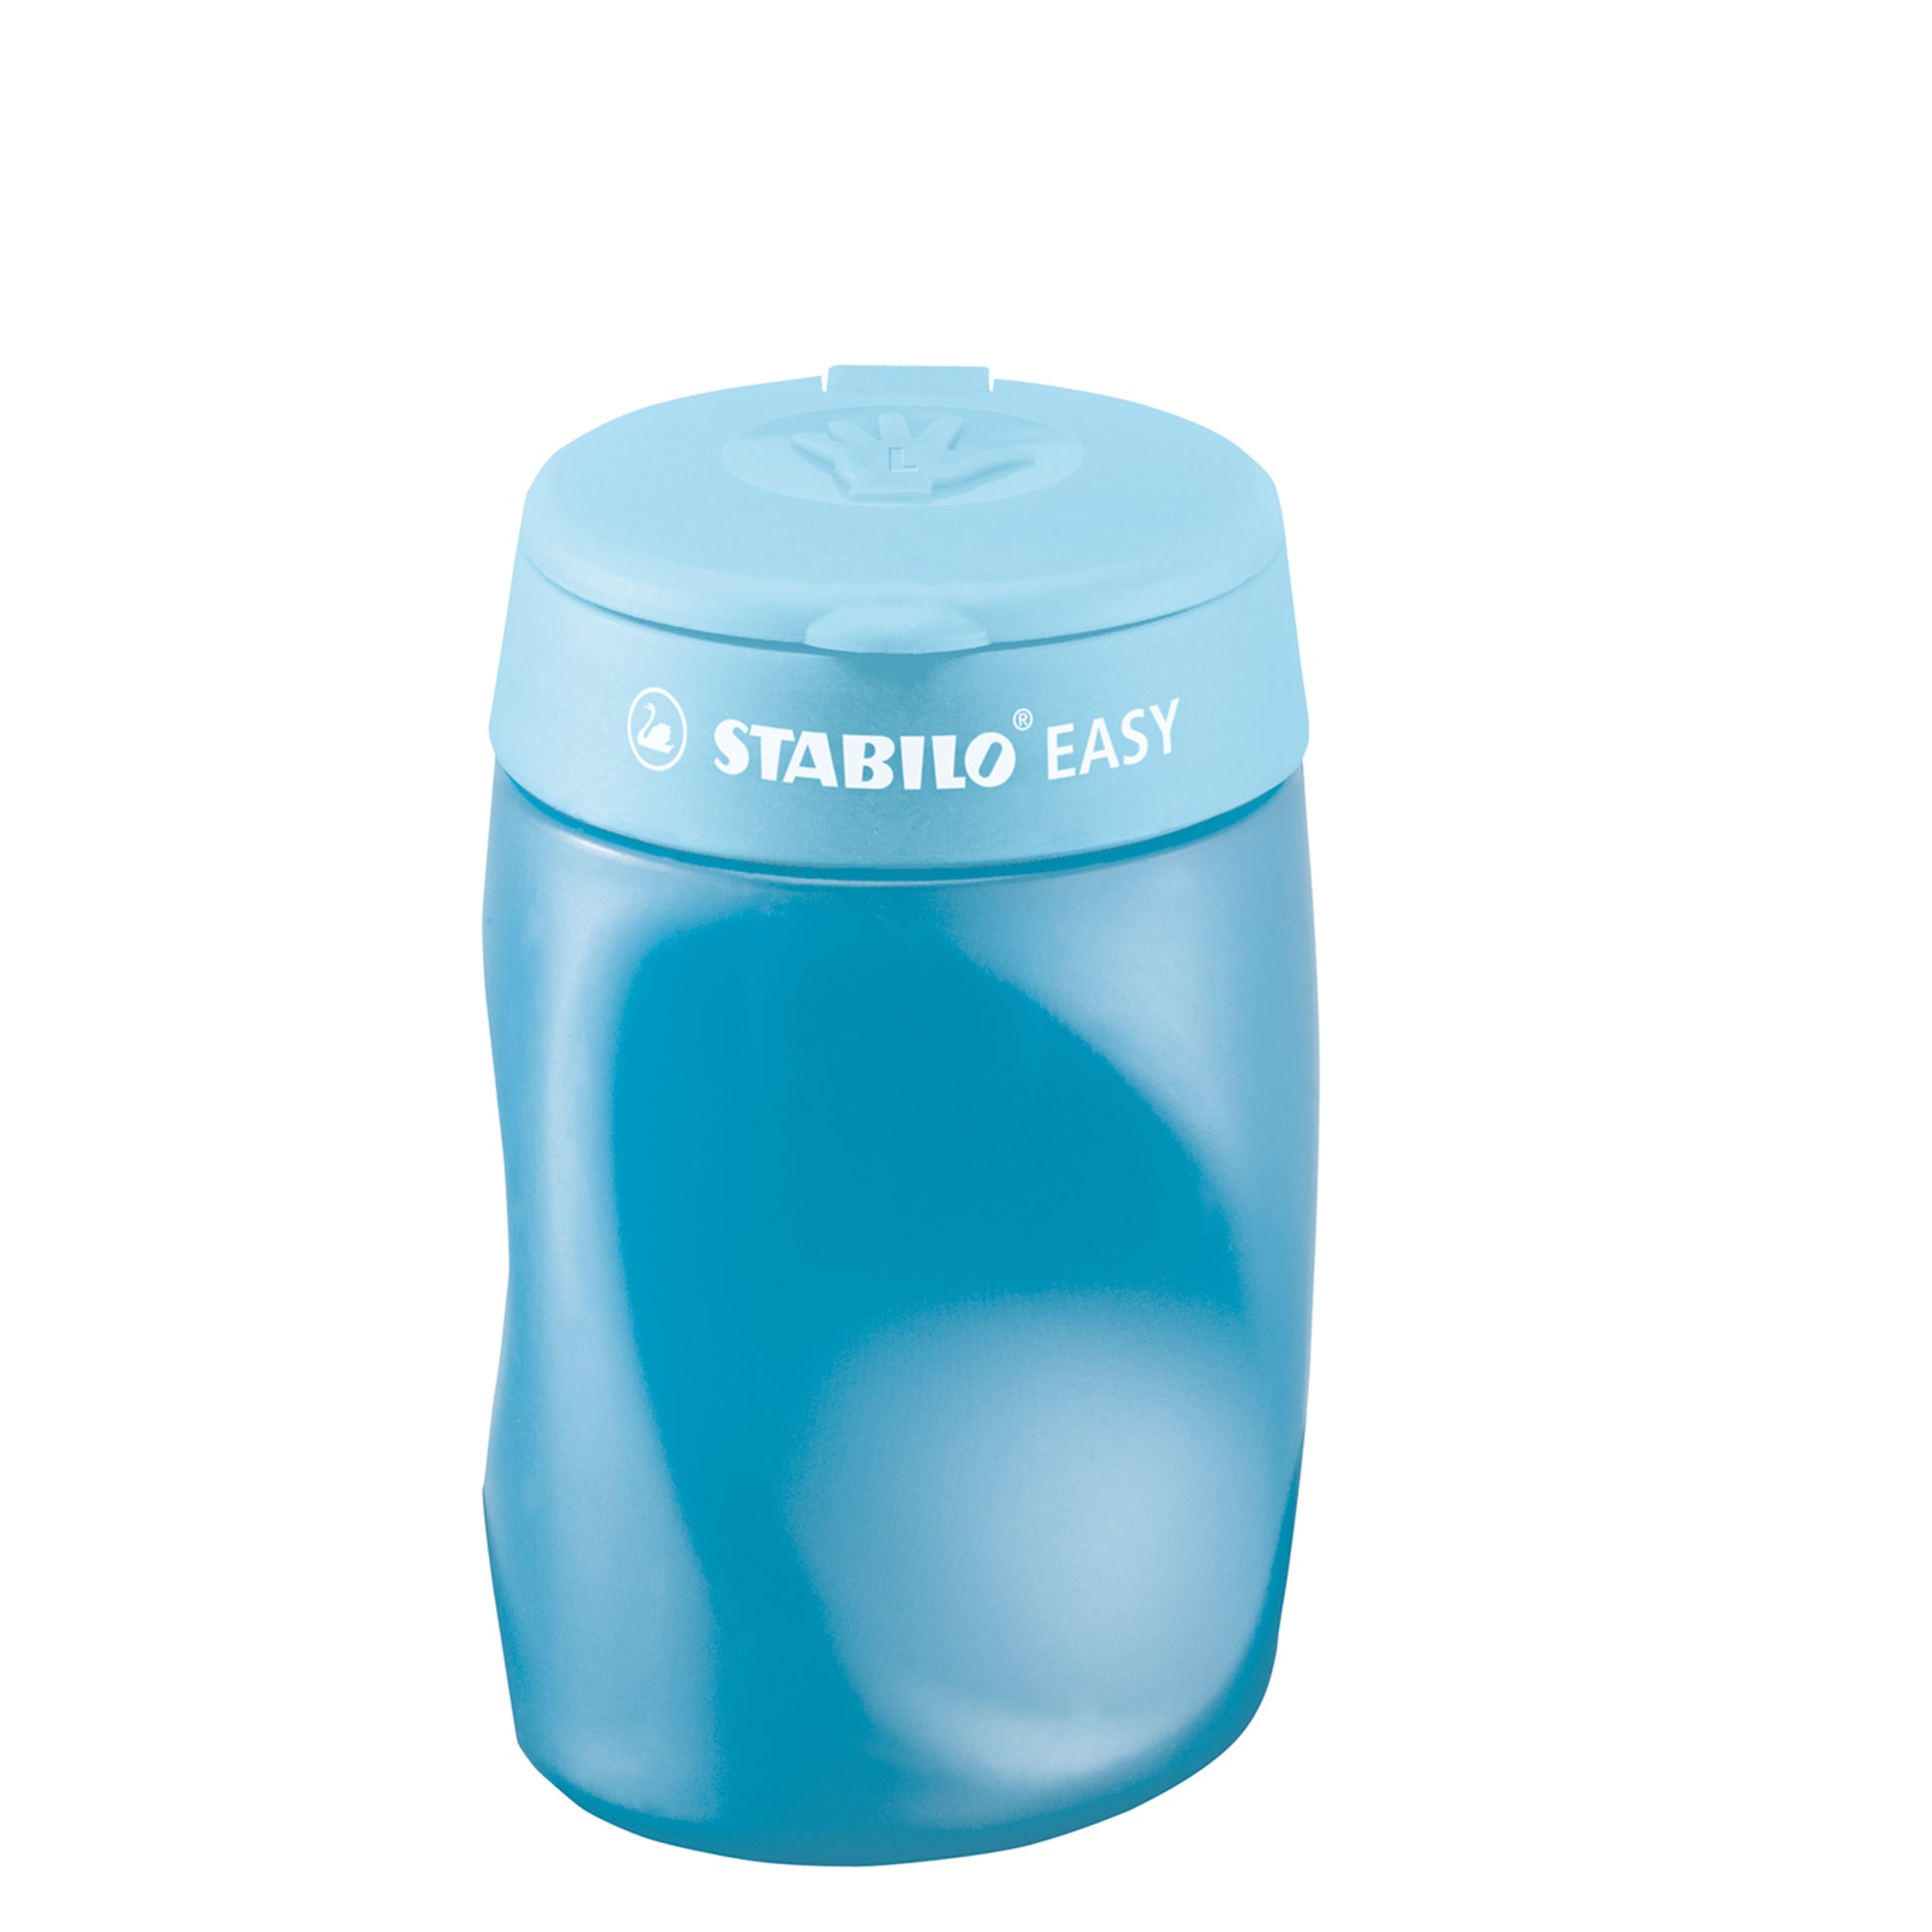 stabilo-temperamatite-easy-3-fori-c-contenitore-ergonomico-blu-mancini